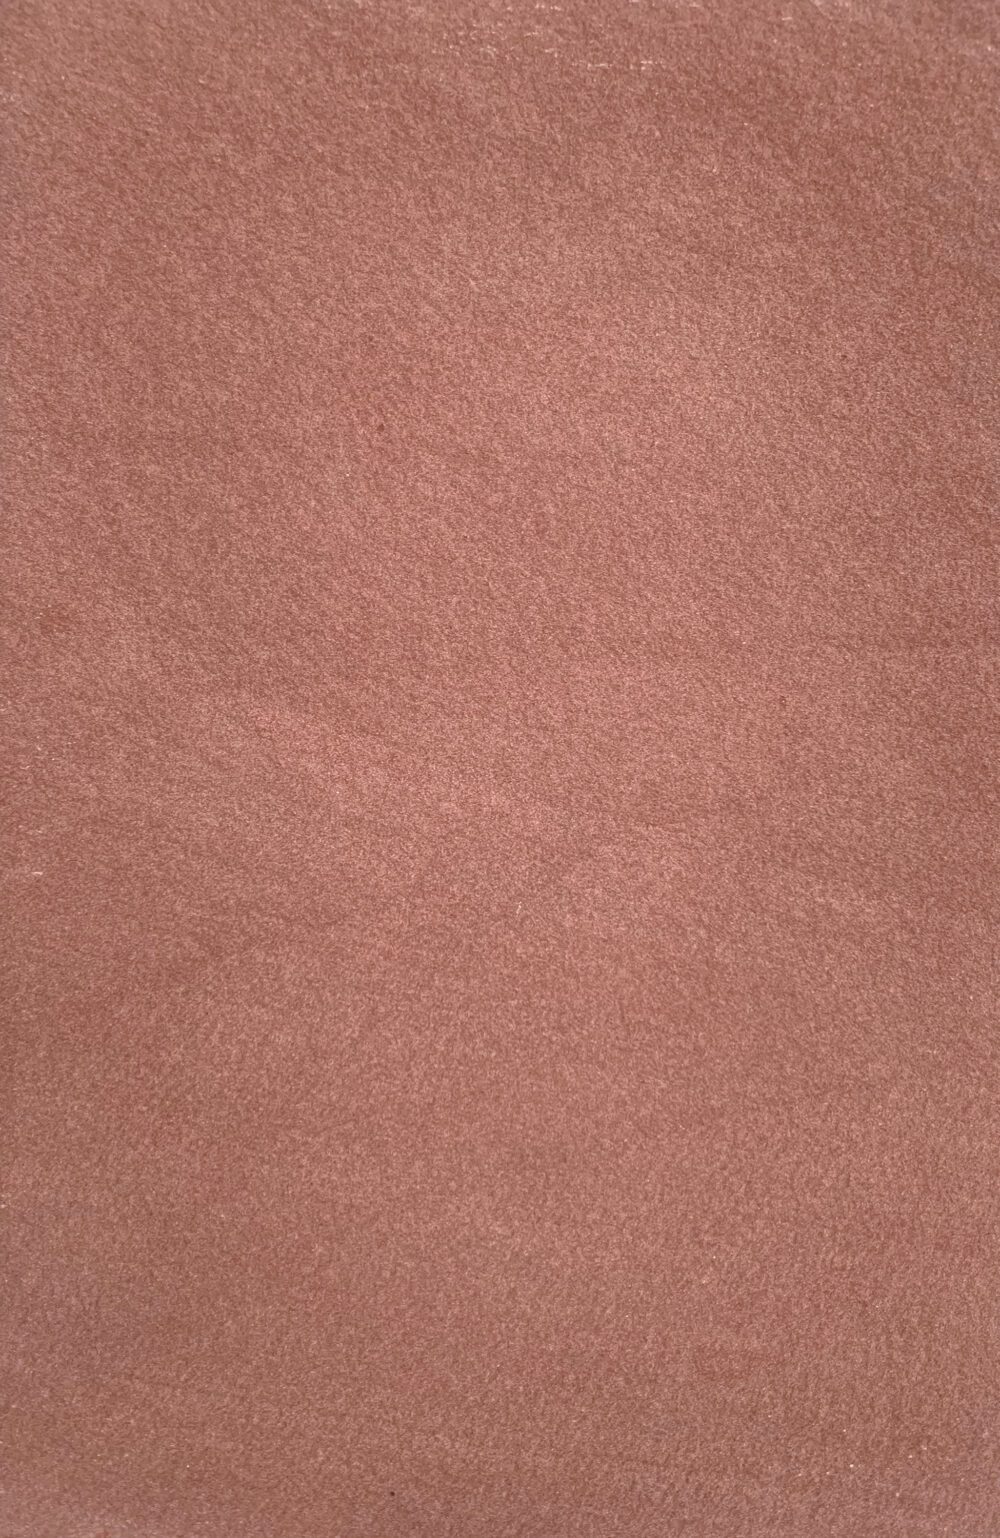 Sandstone- Agra Red